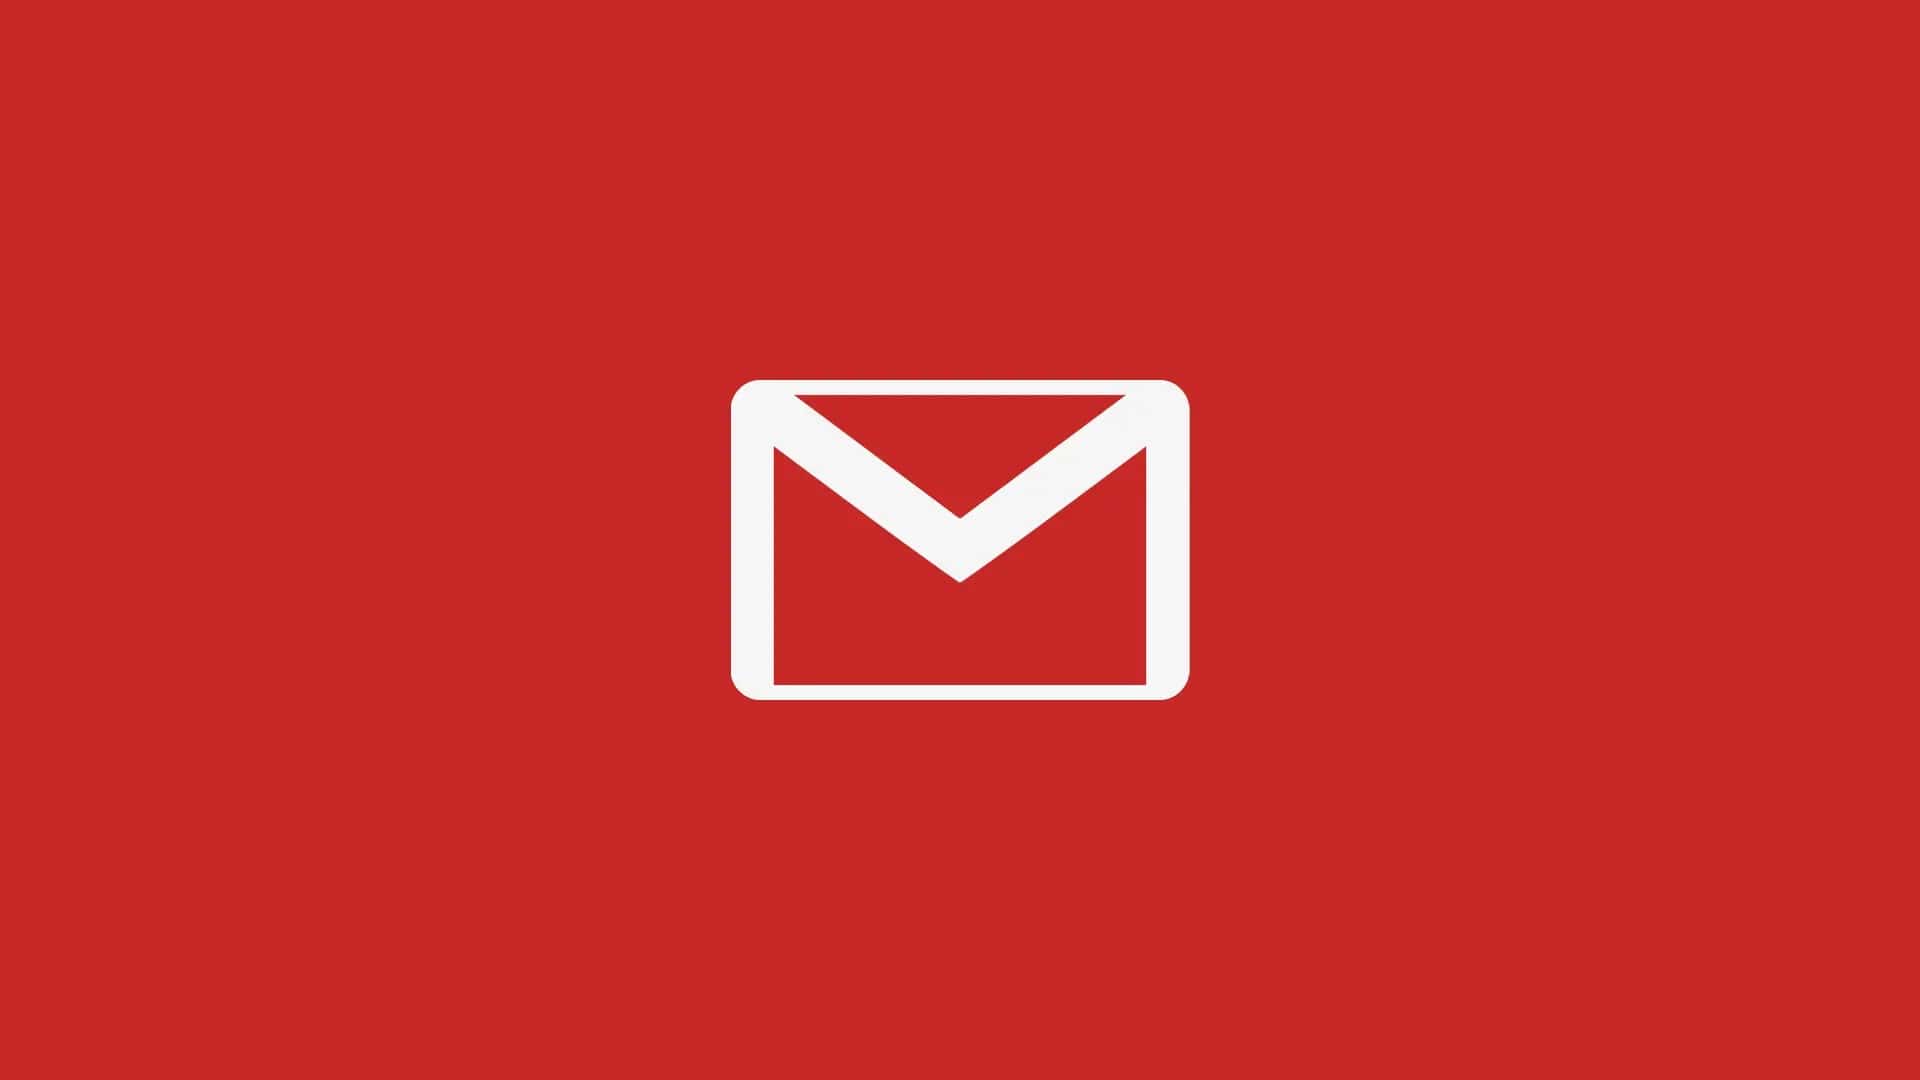 sort gmail by sender